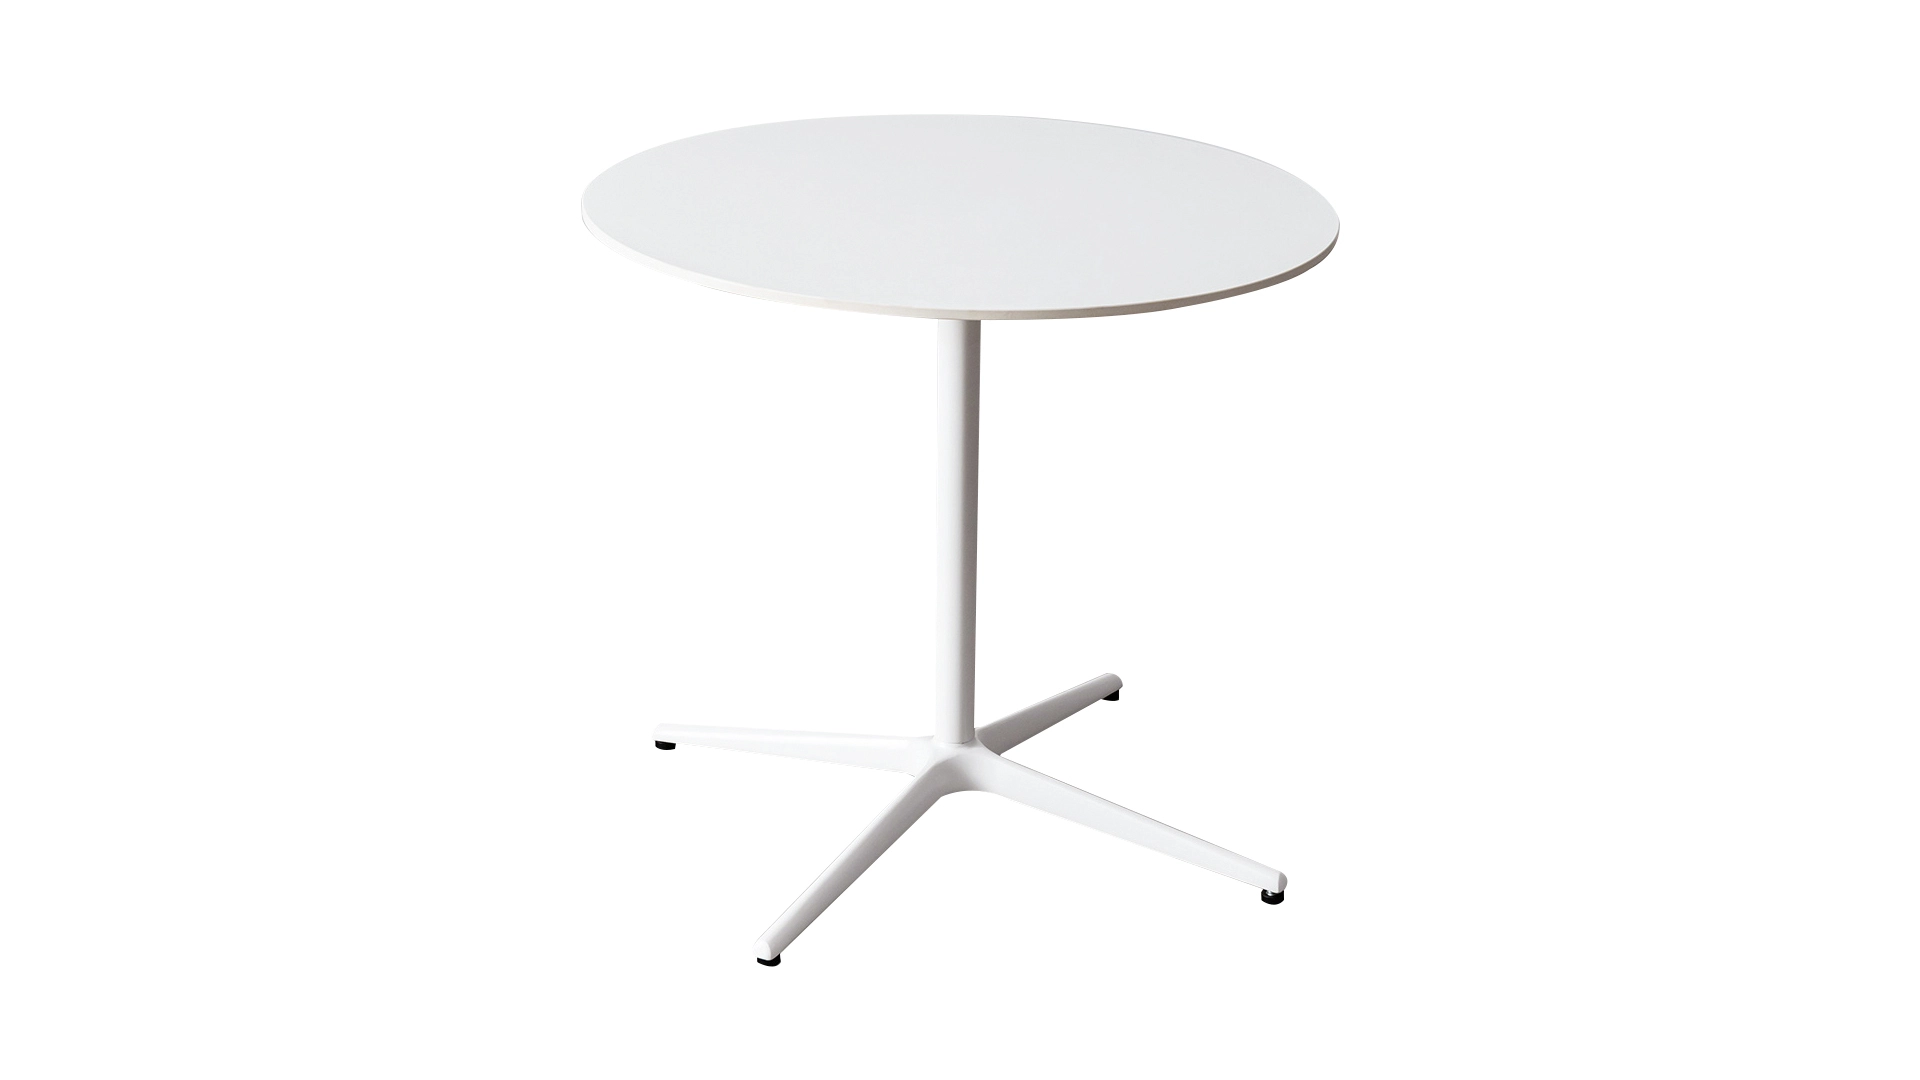 Innovation Yika -S Simple Design Living yara Table Pẹlu seramiki Table Top BK Ciandre 1